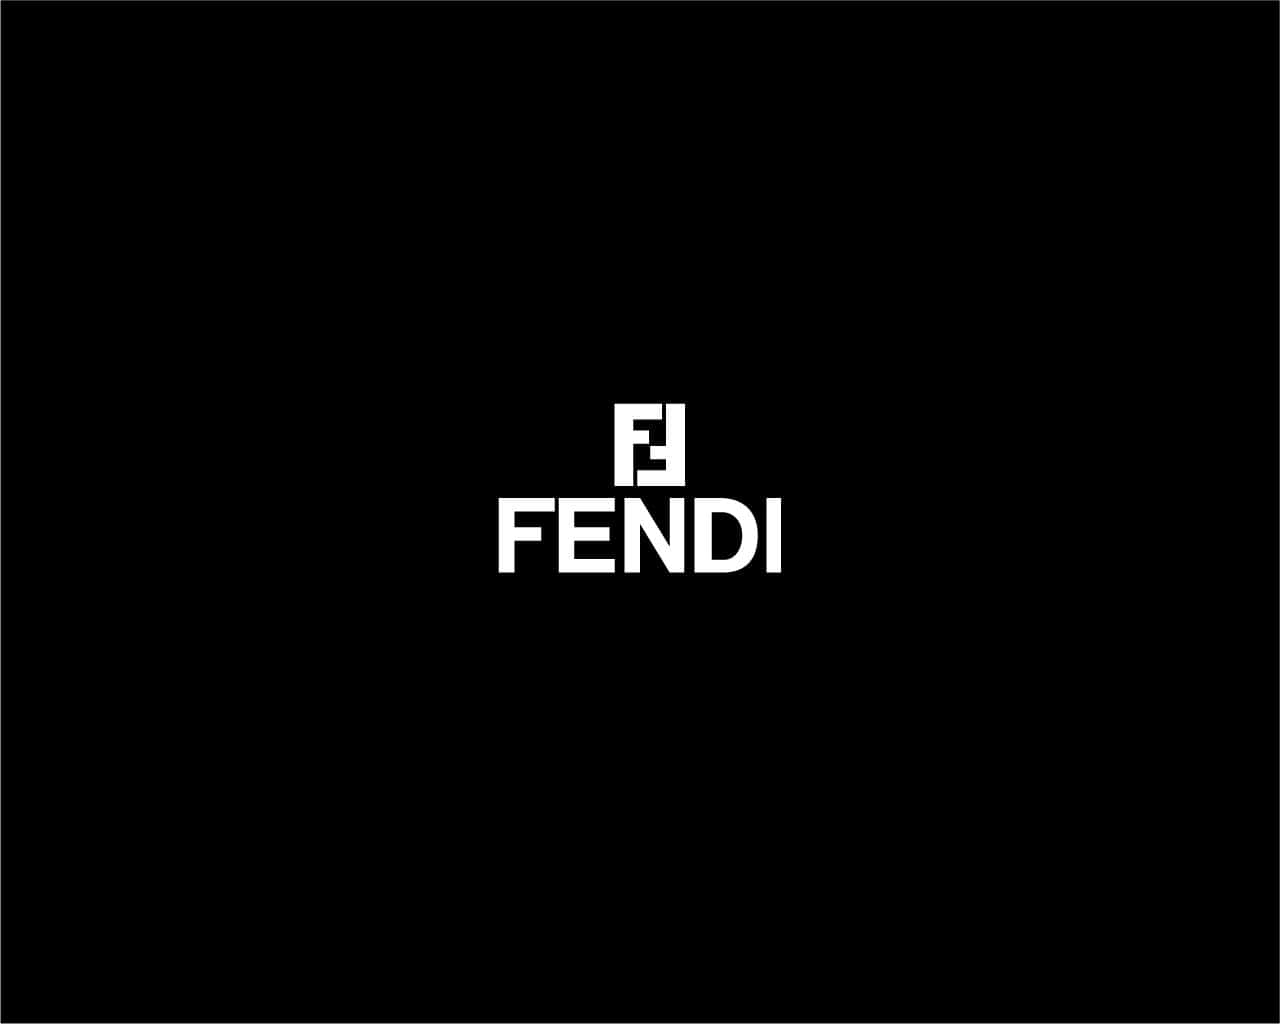 Download Fendi Background | Wallpapers.com